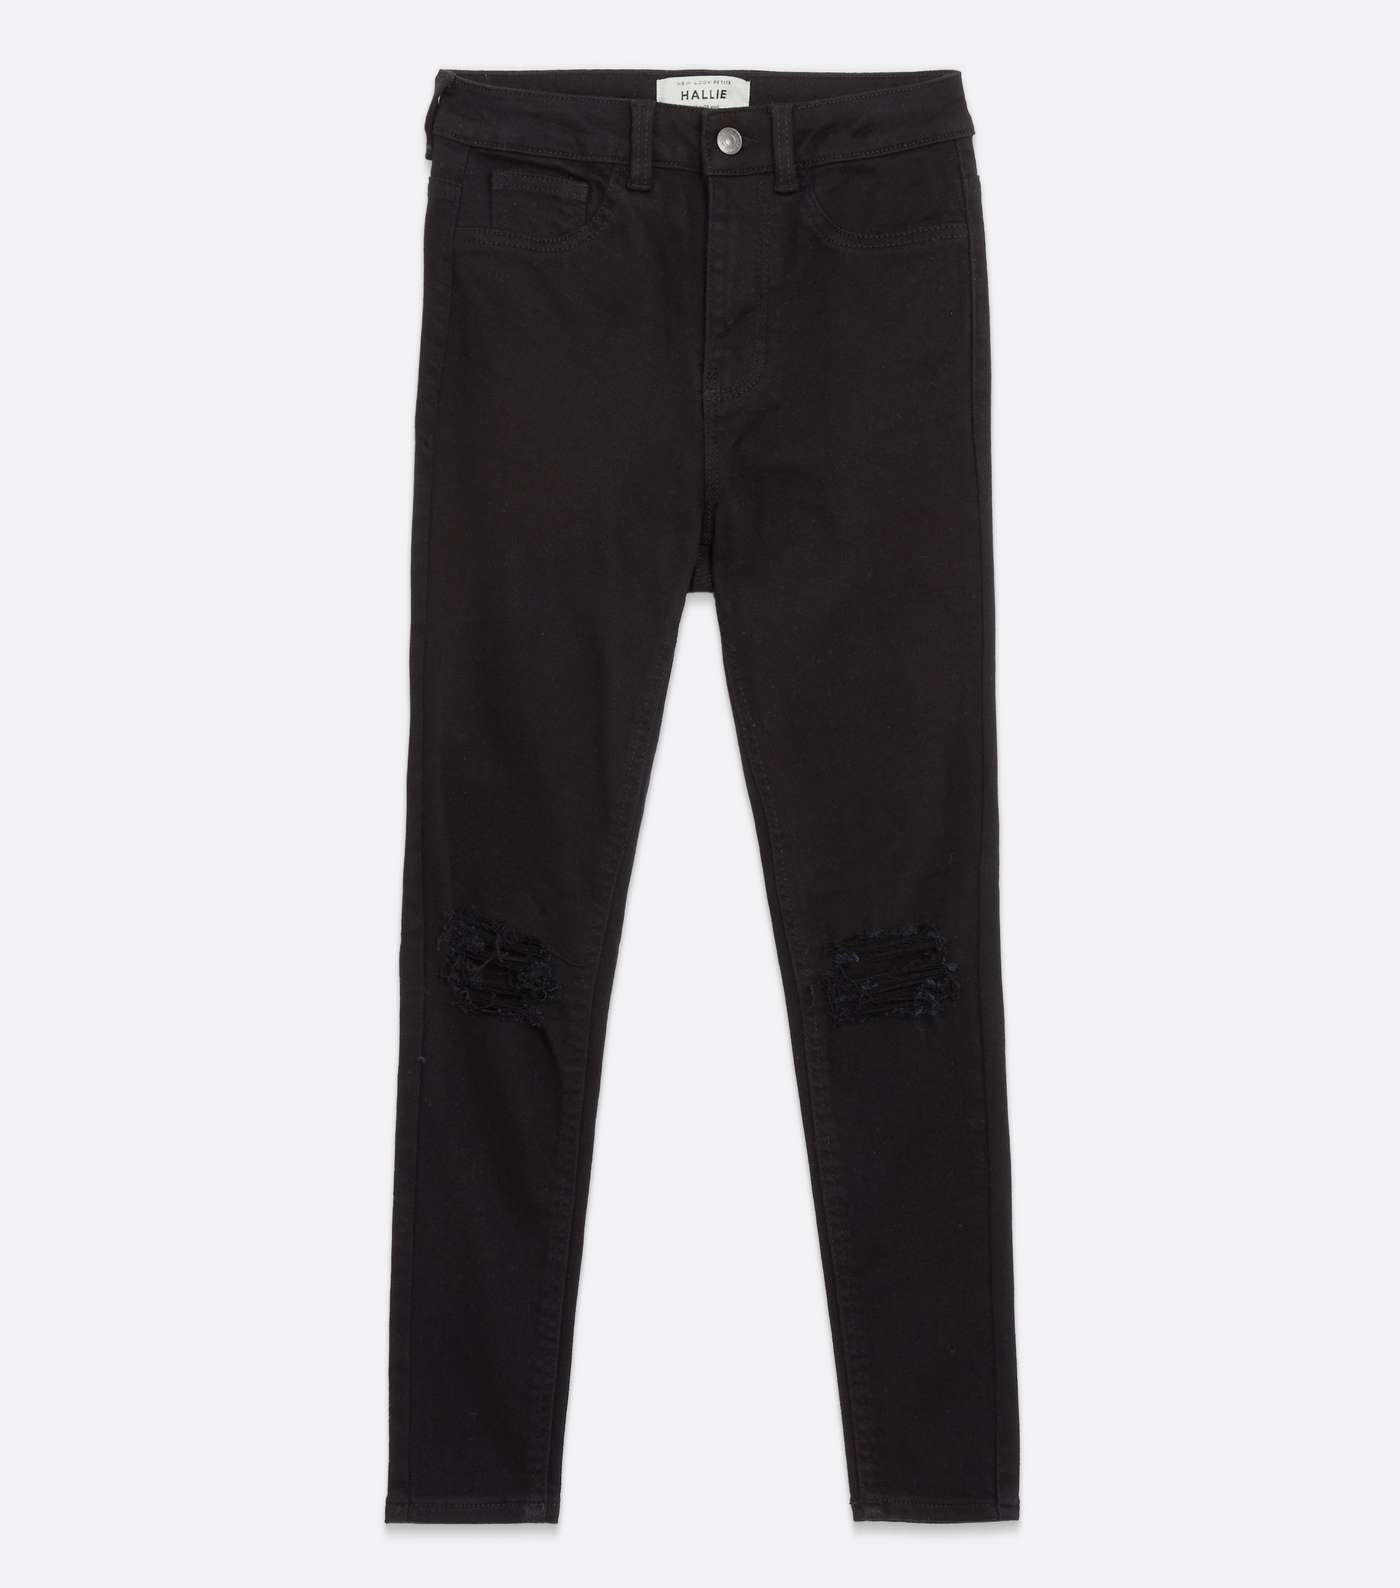 Petite Black Ripped High Waist Hallie Super Skinny Jeans Image 5